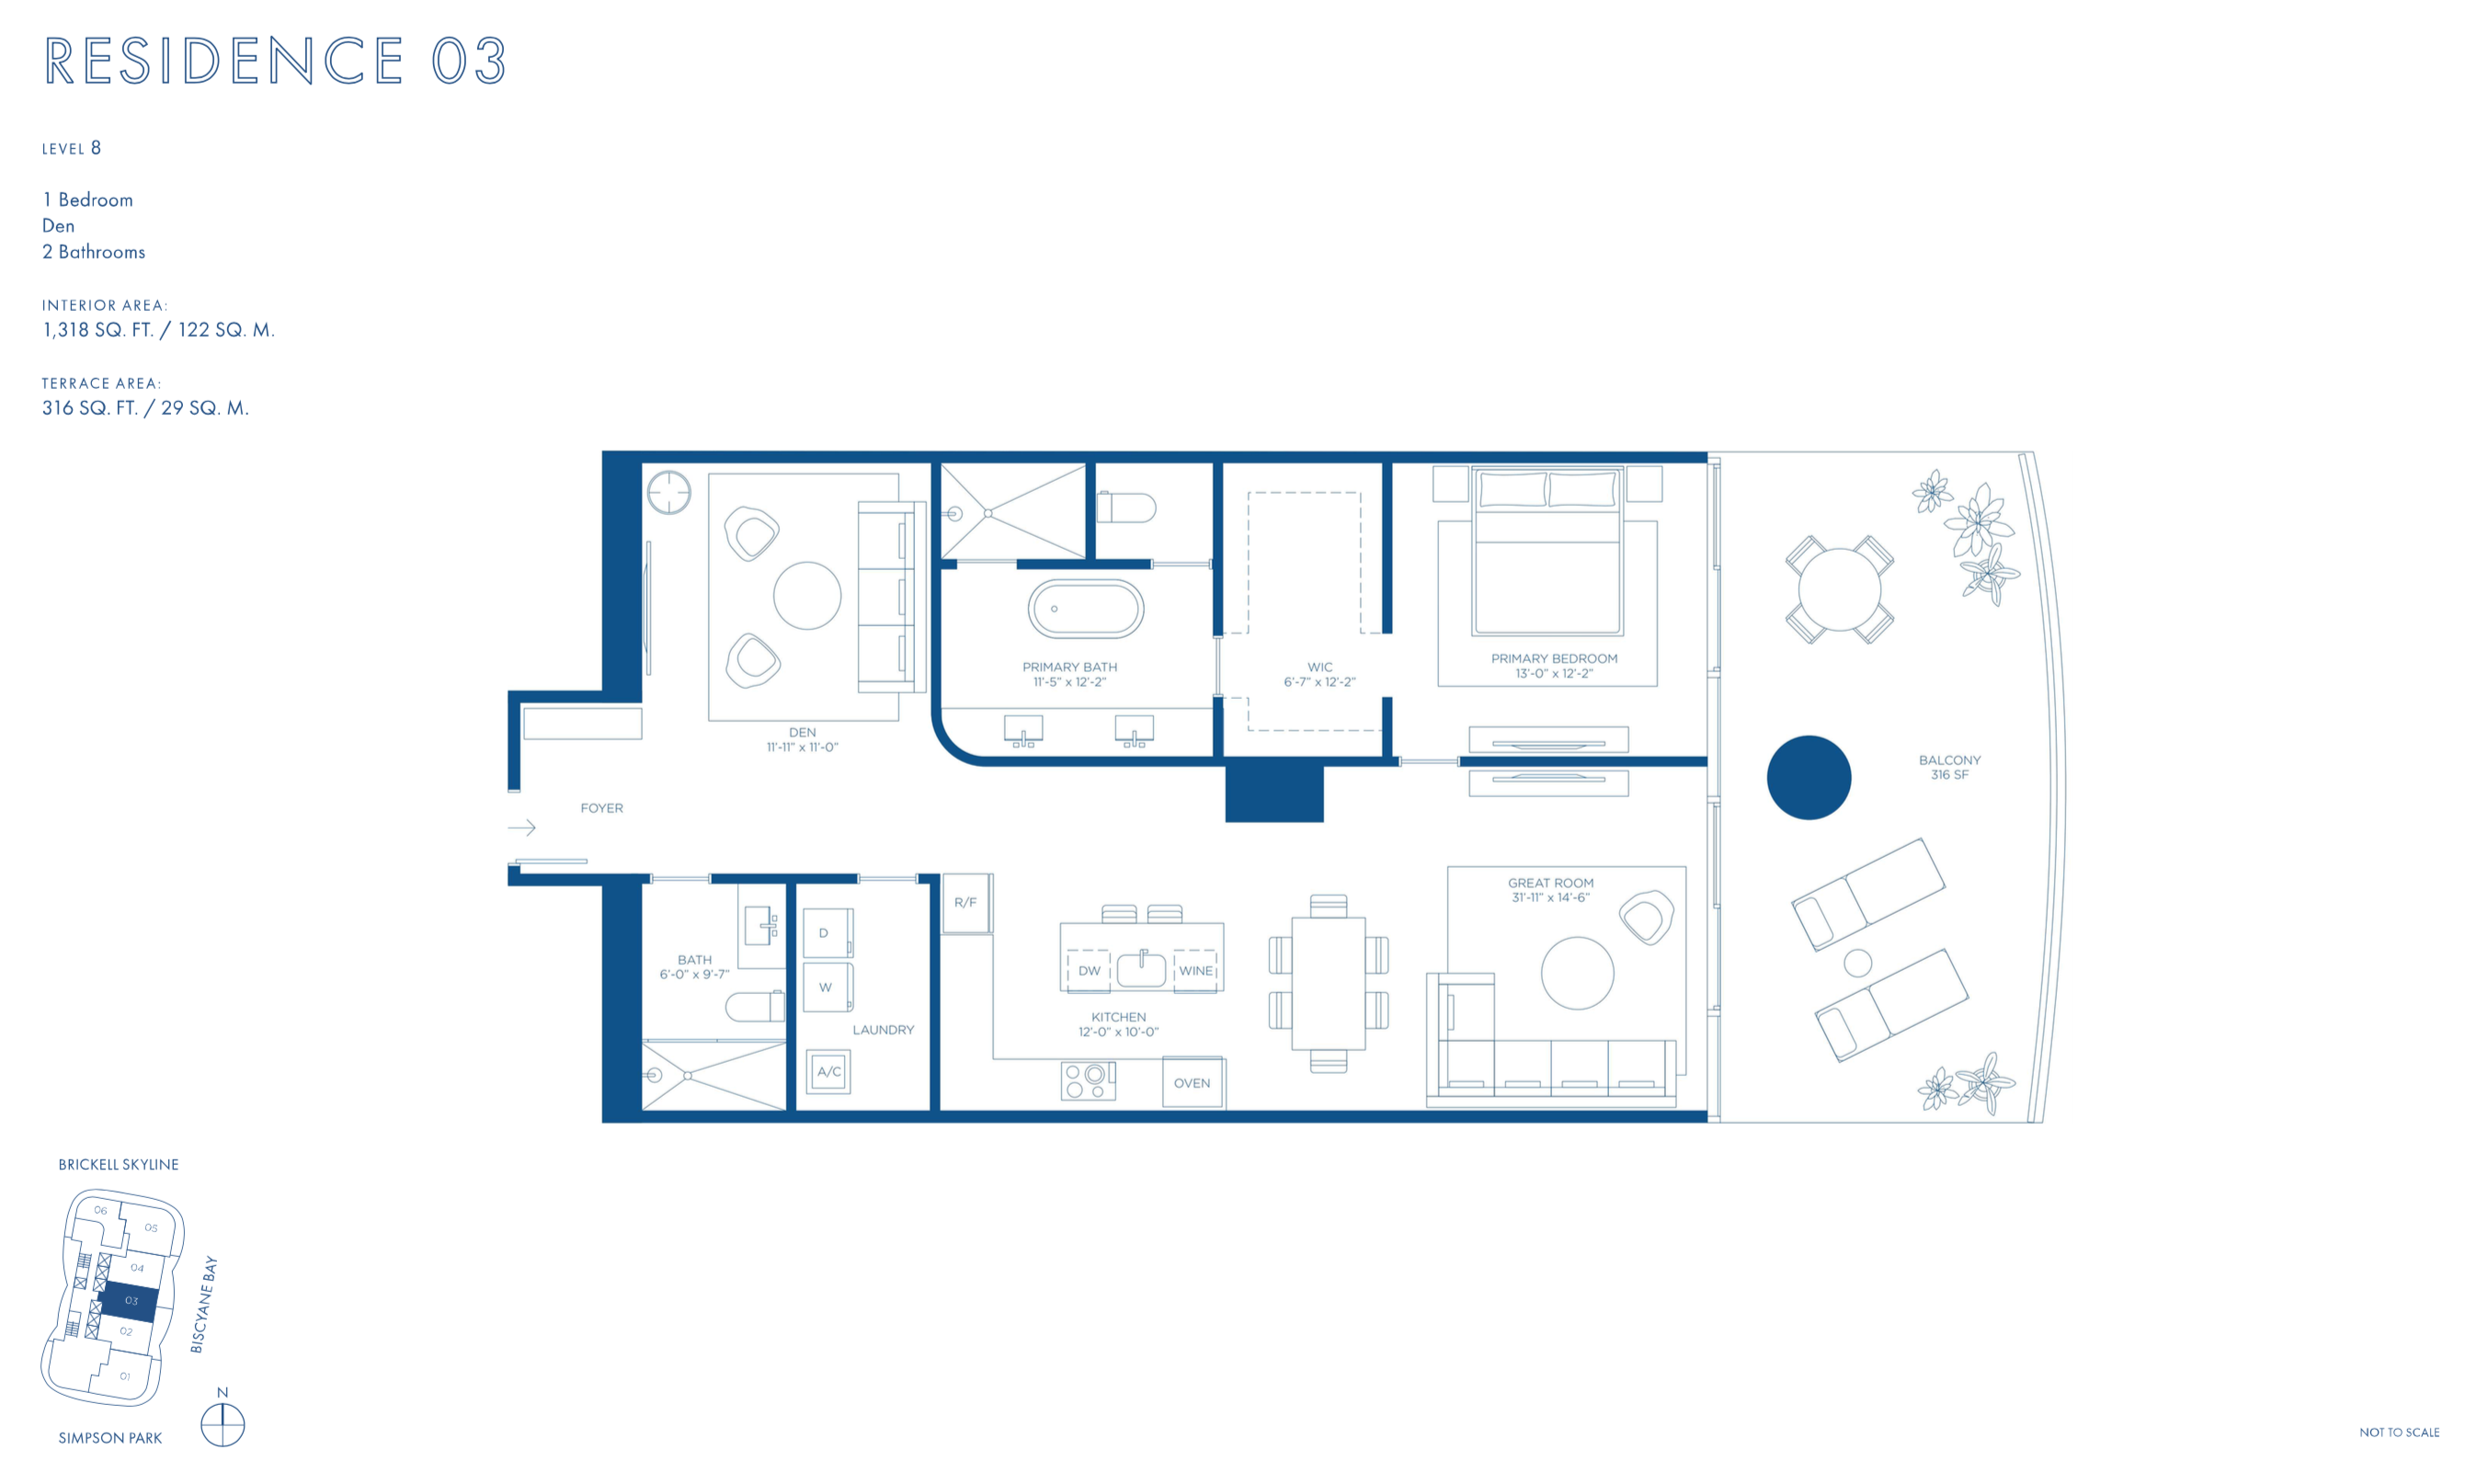 Cipriani Residences Brickell | Residence 03 | Floor 8 | 1 Be + Den/2 Ba | 1,318 SF